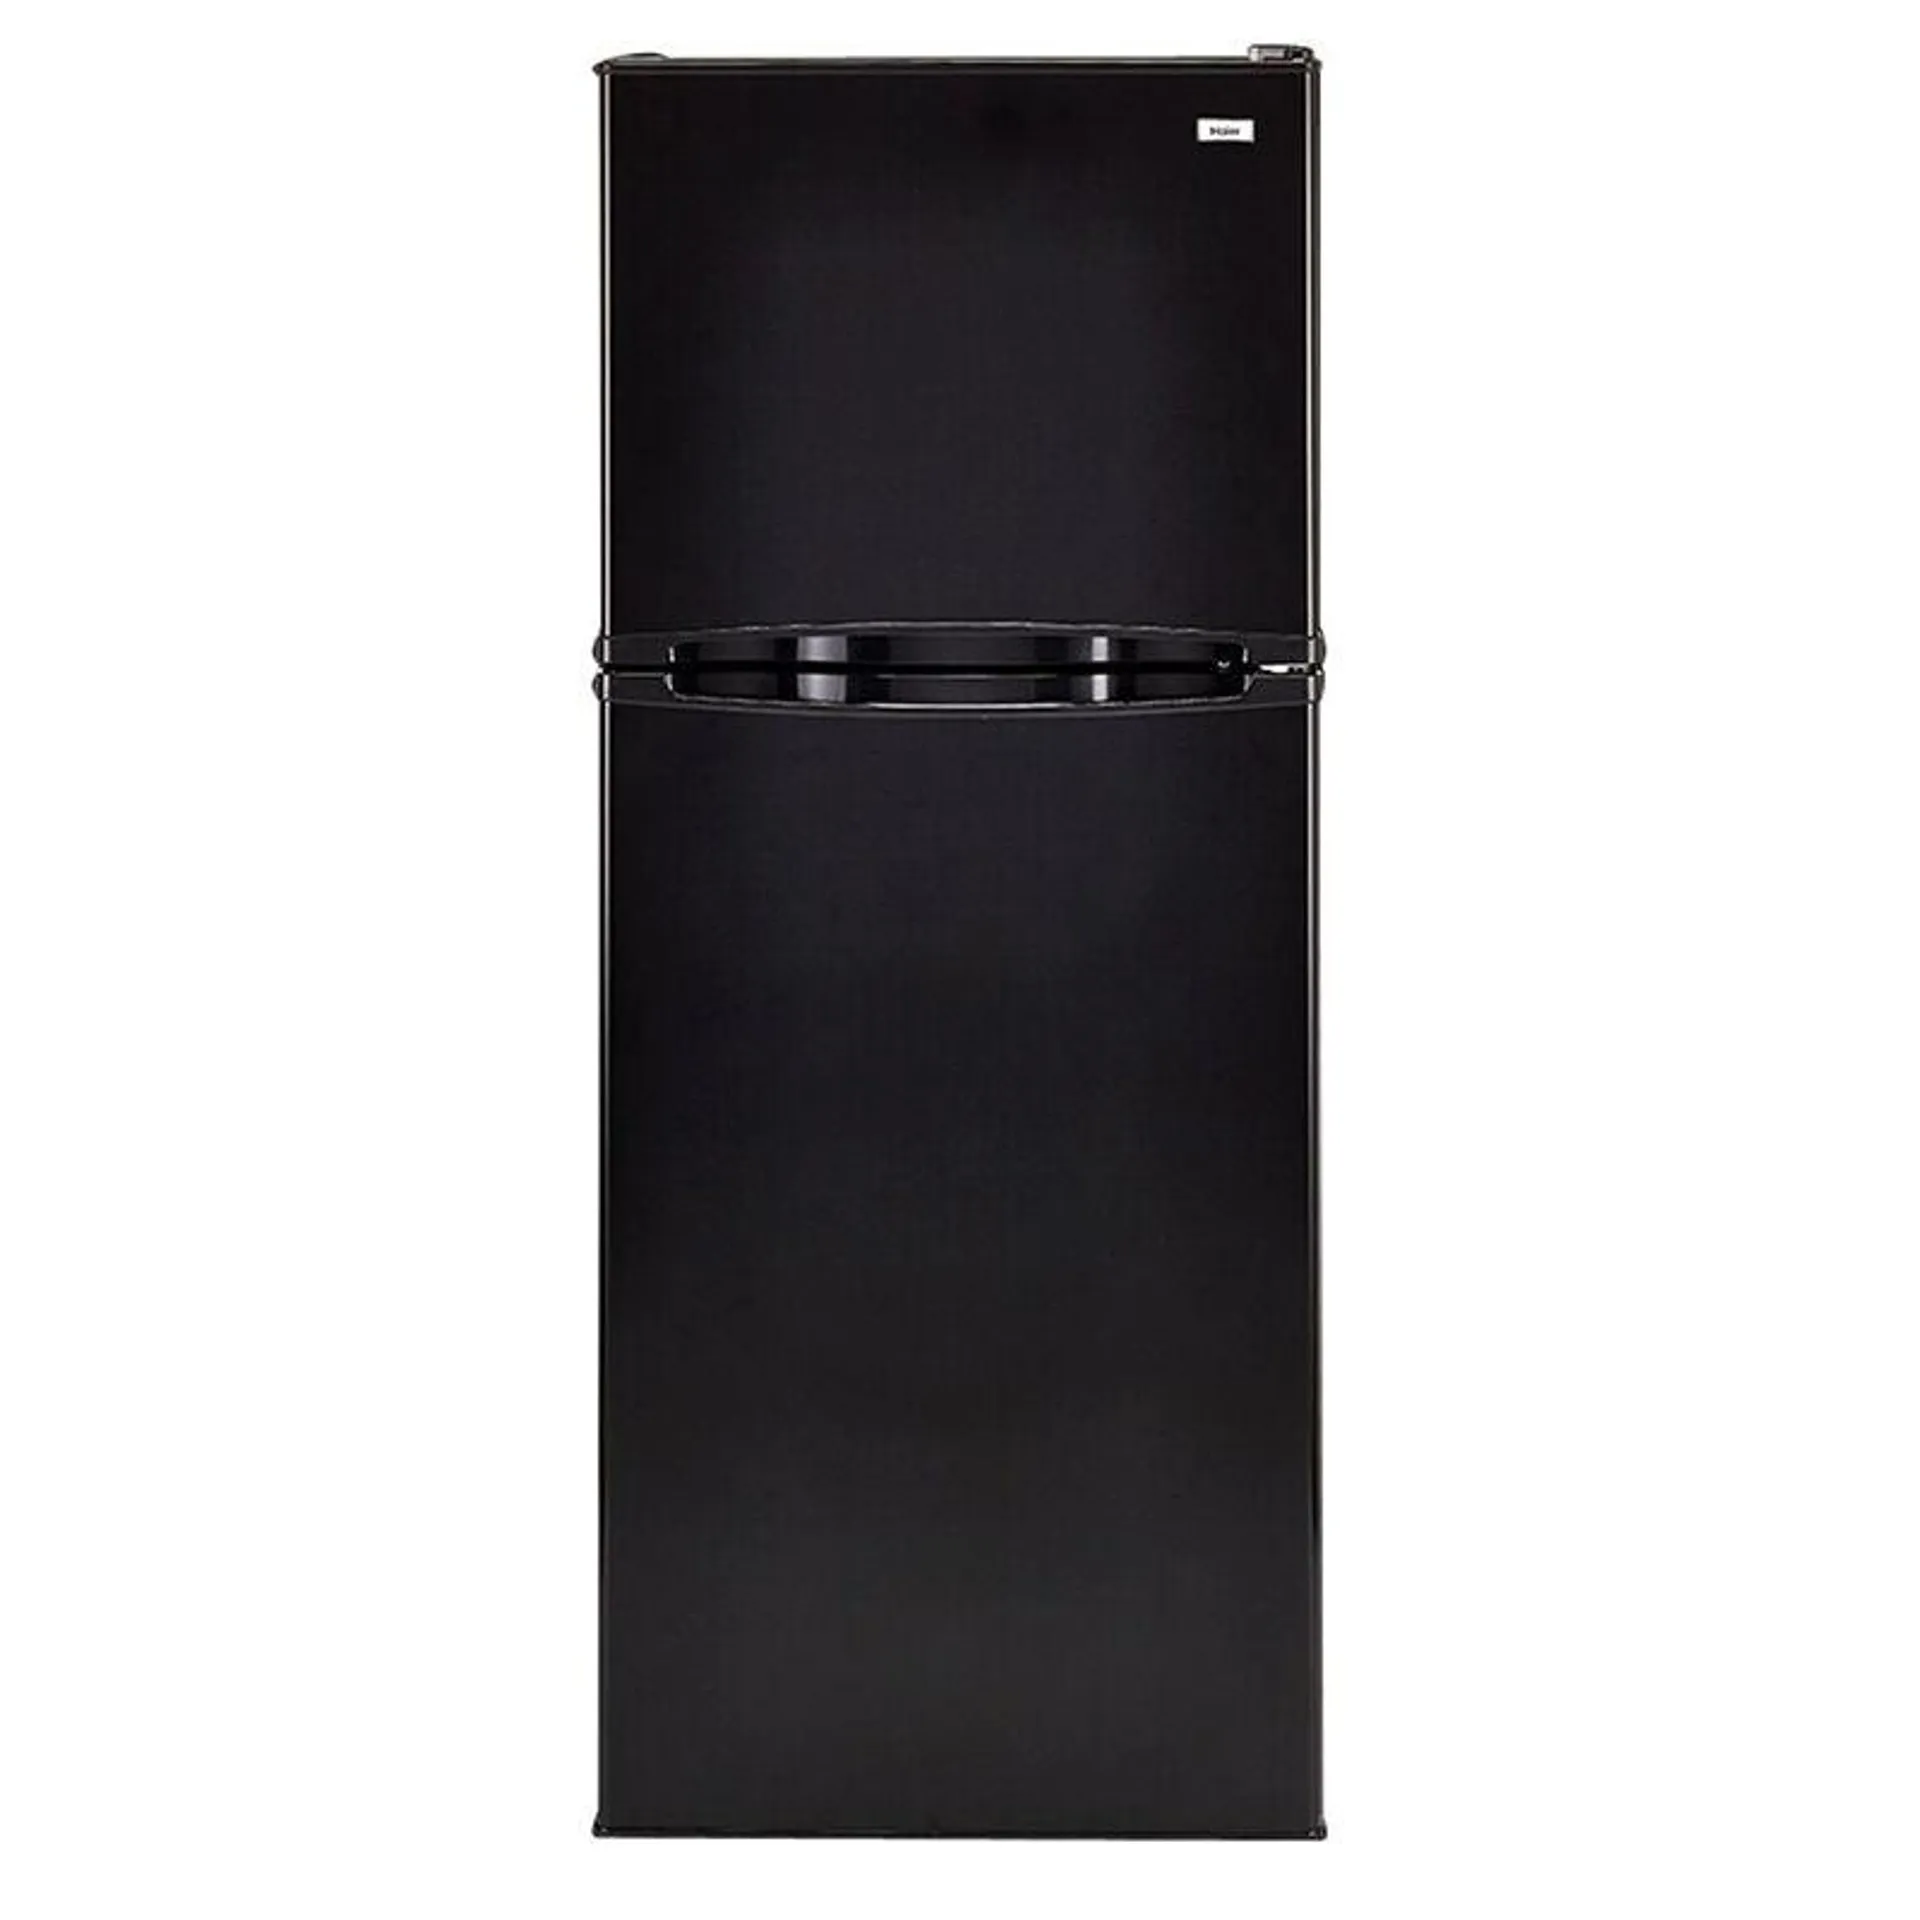 Haier 24 in. 9.8 cu. ft. Apartment Top Freezer Refrigerator - Black